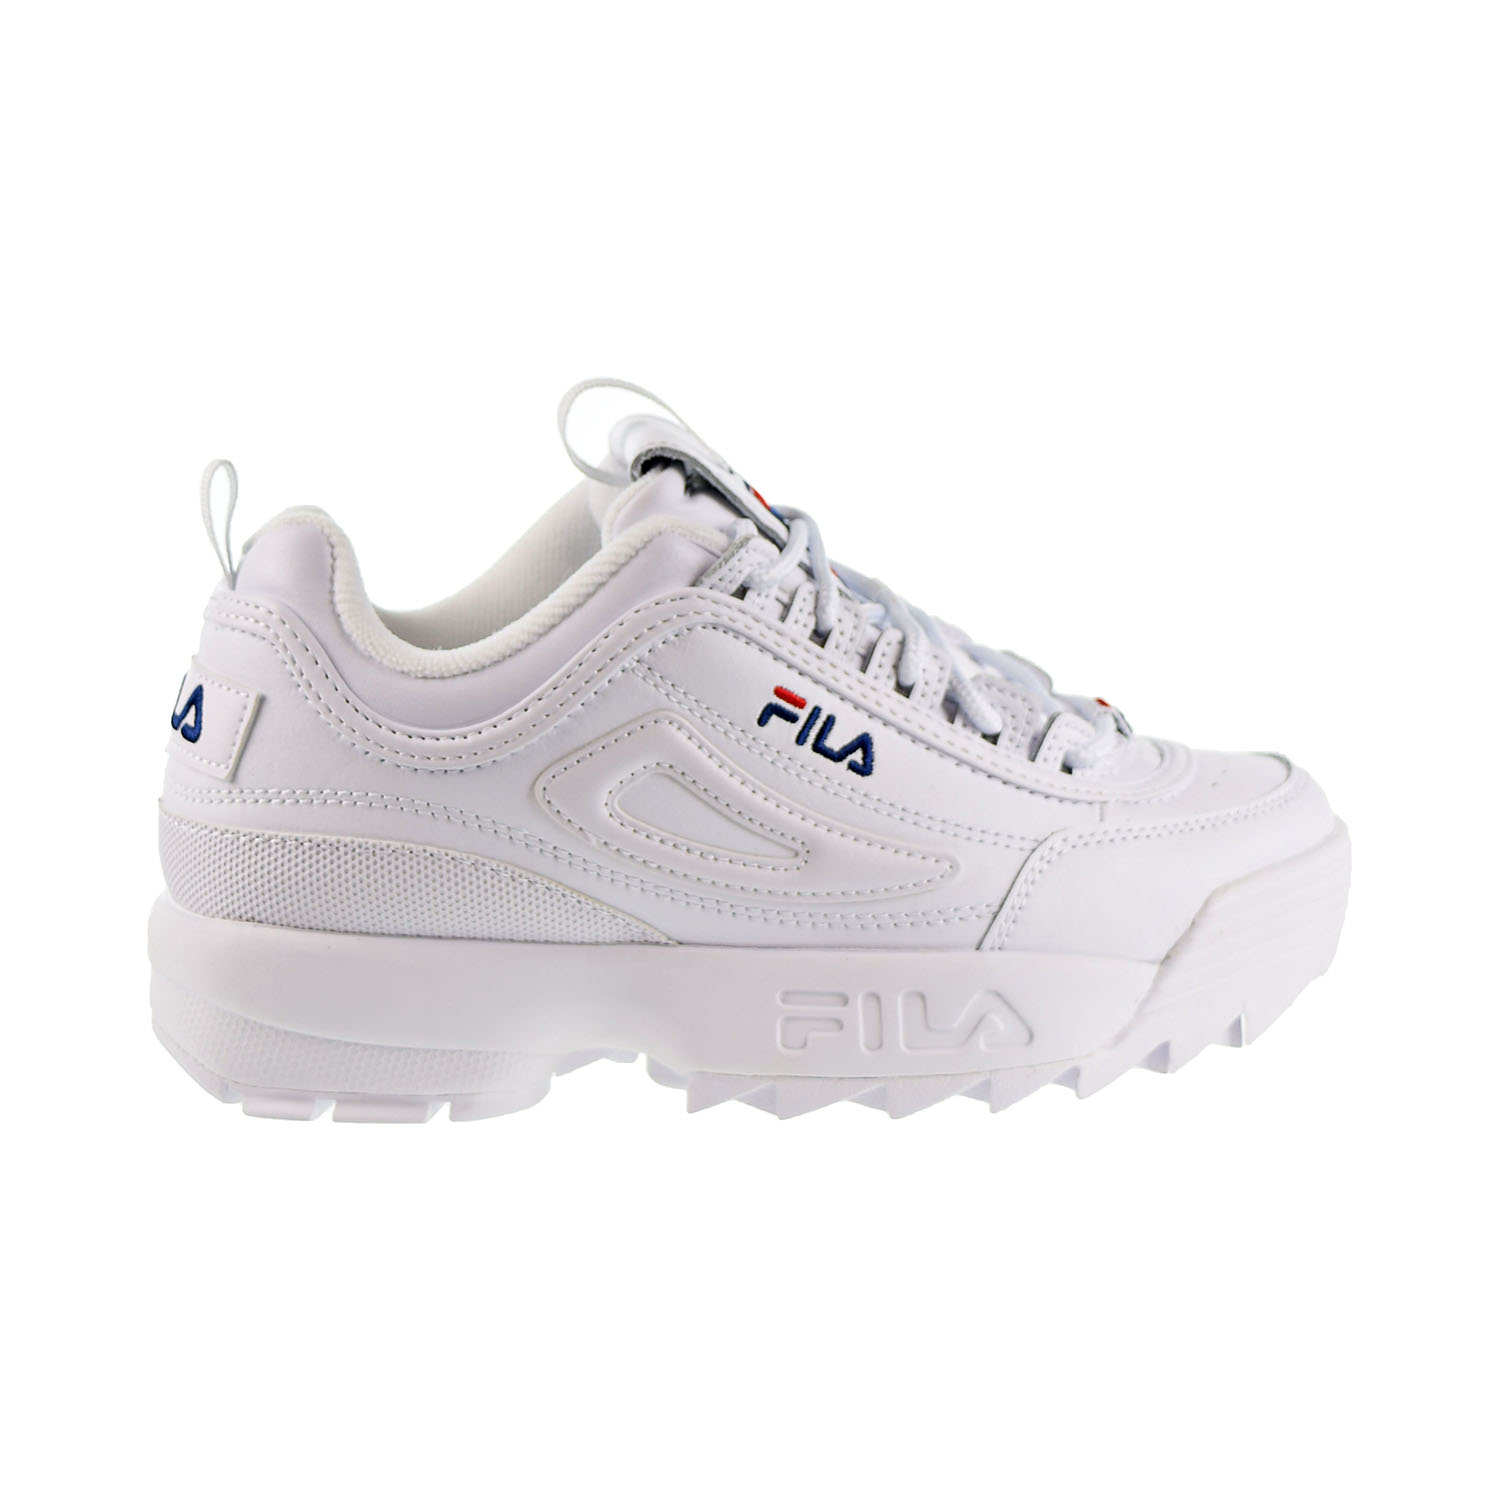 Fila Disrupter 2 Premium Womens Shoes White/Fila Navy/Fila Red 5fm00002-125